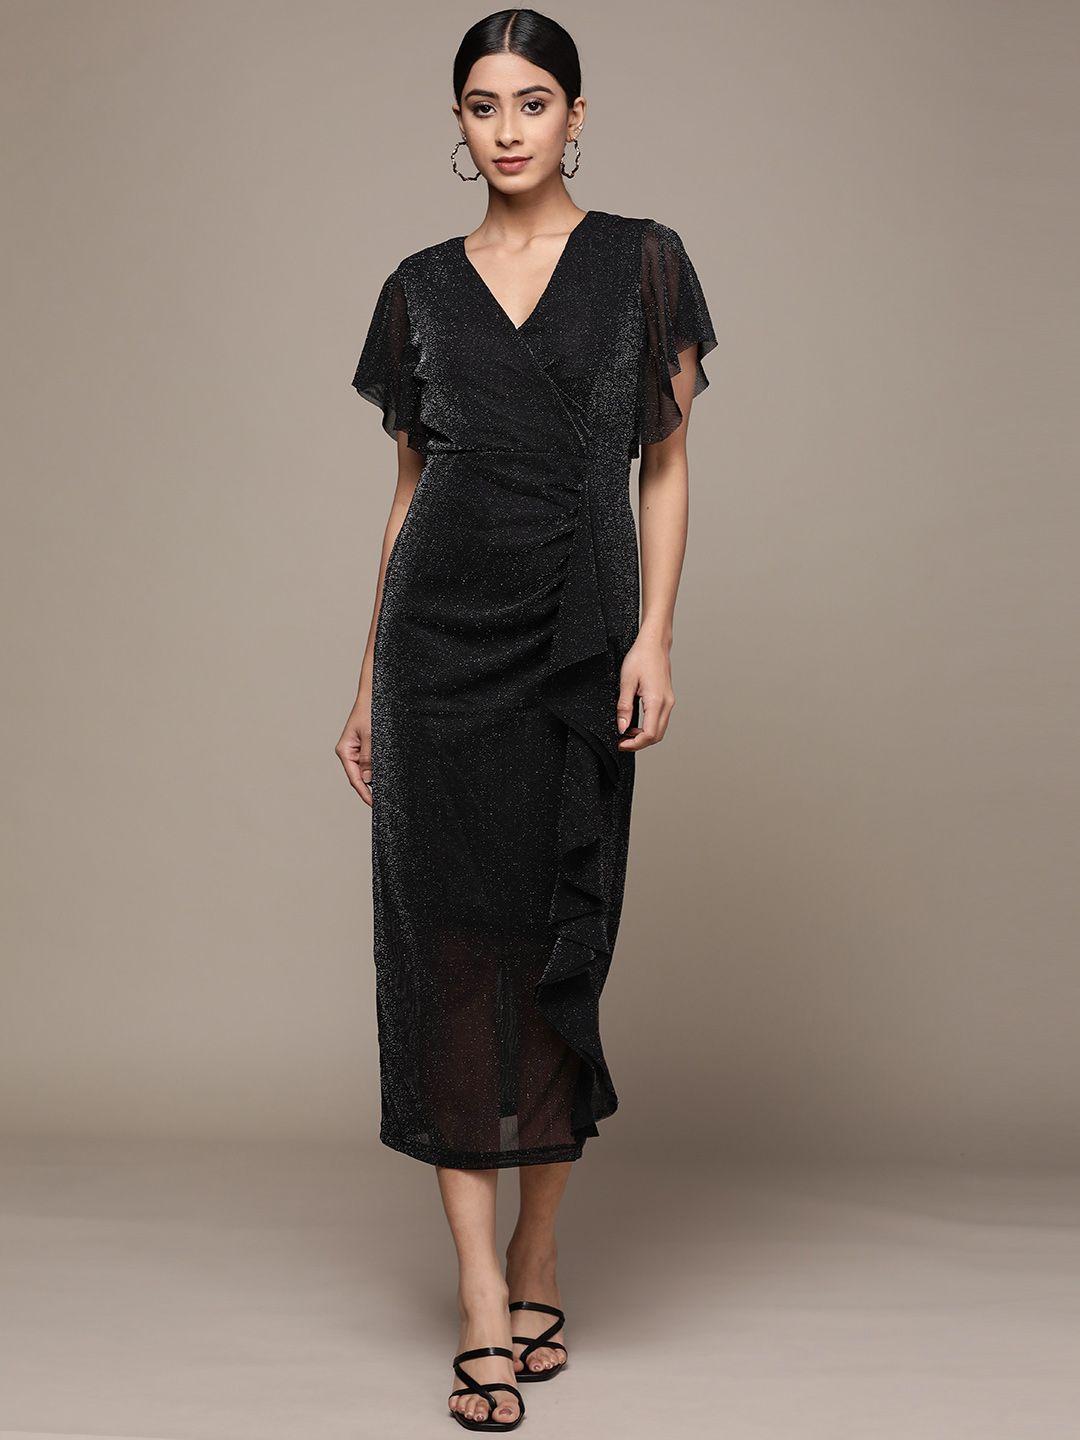 label ritu kumar black embellished shimmer midi dress